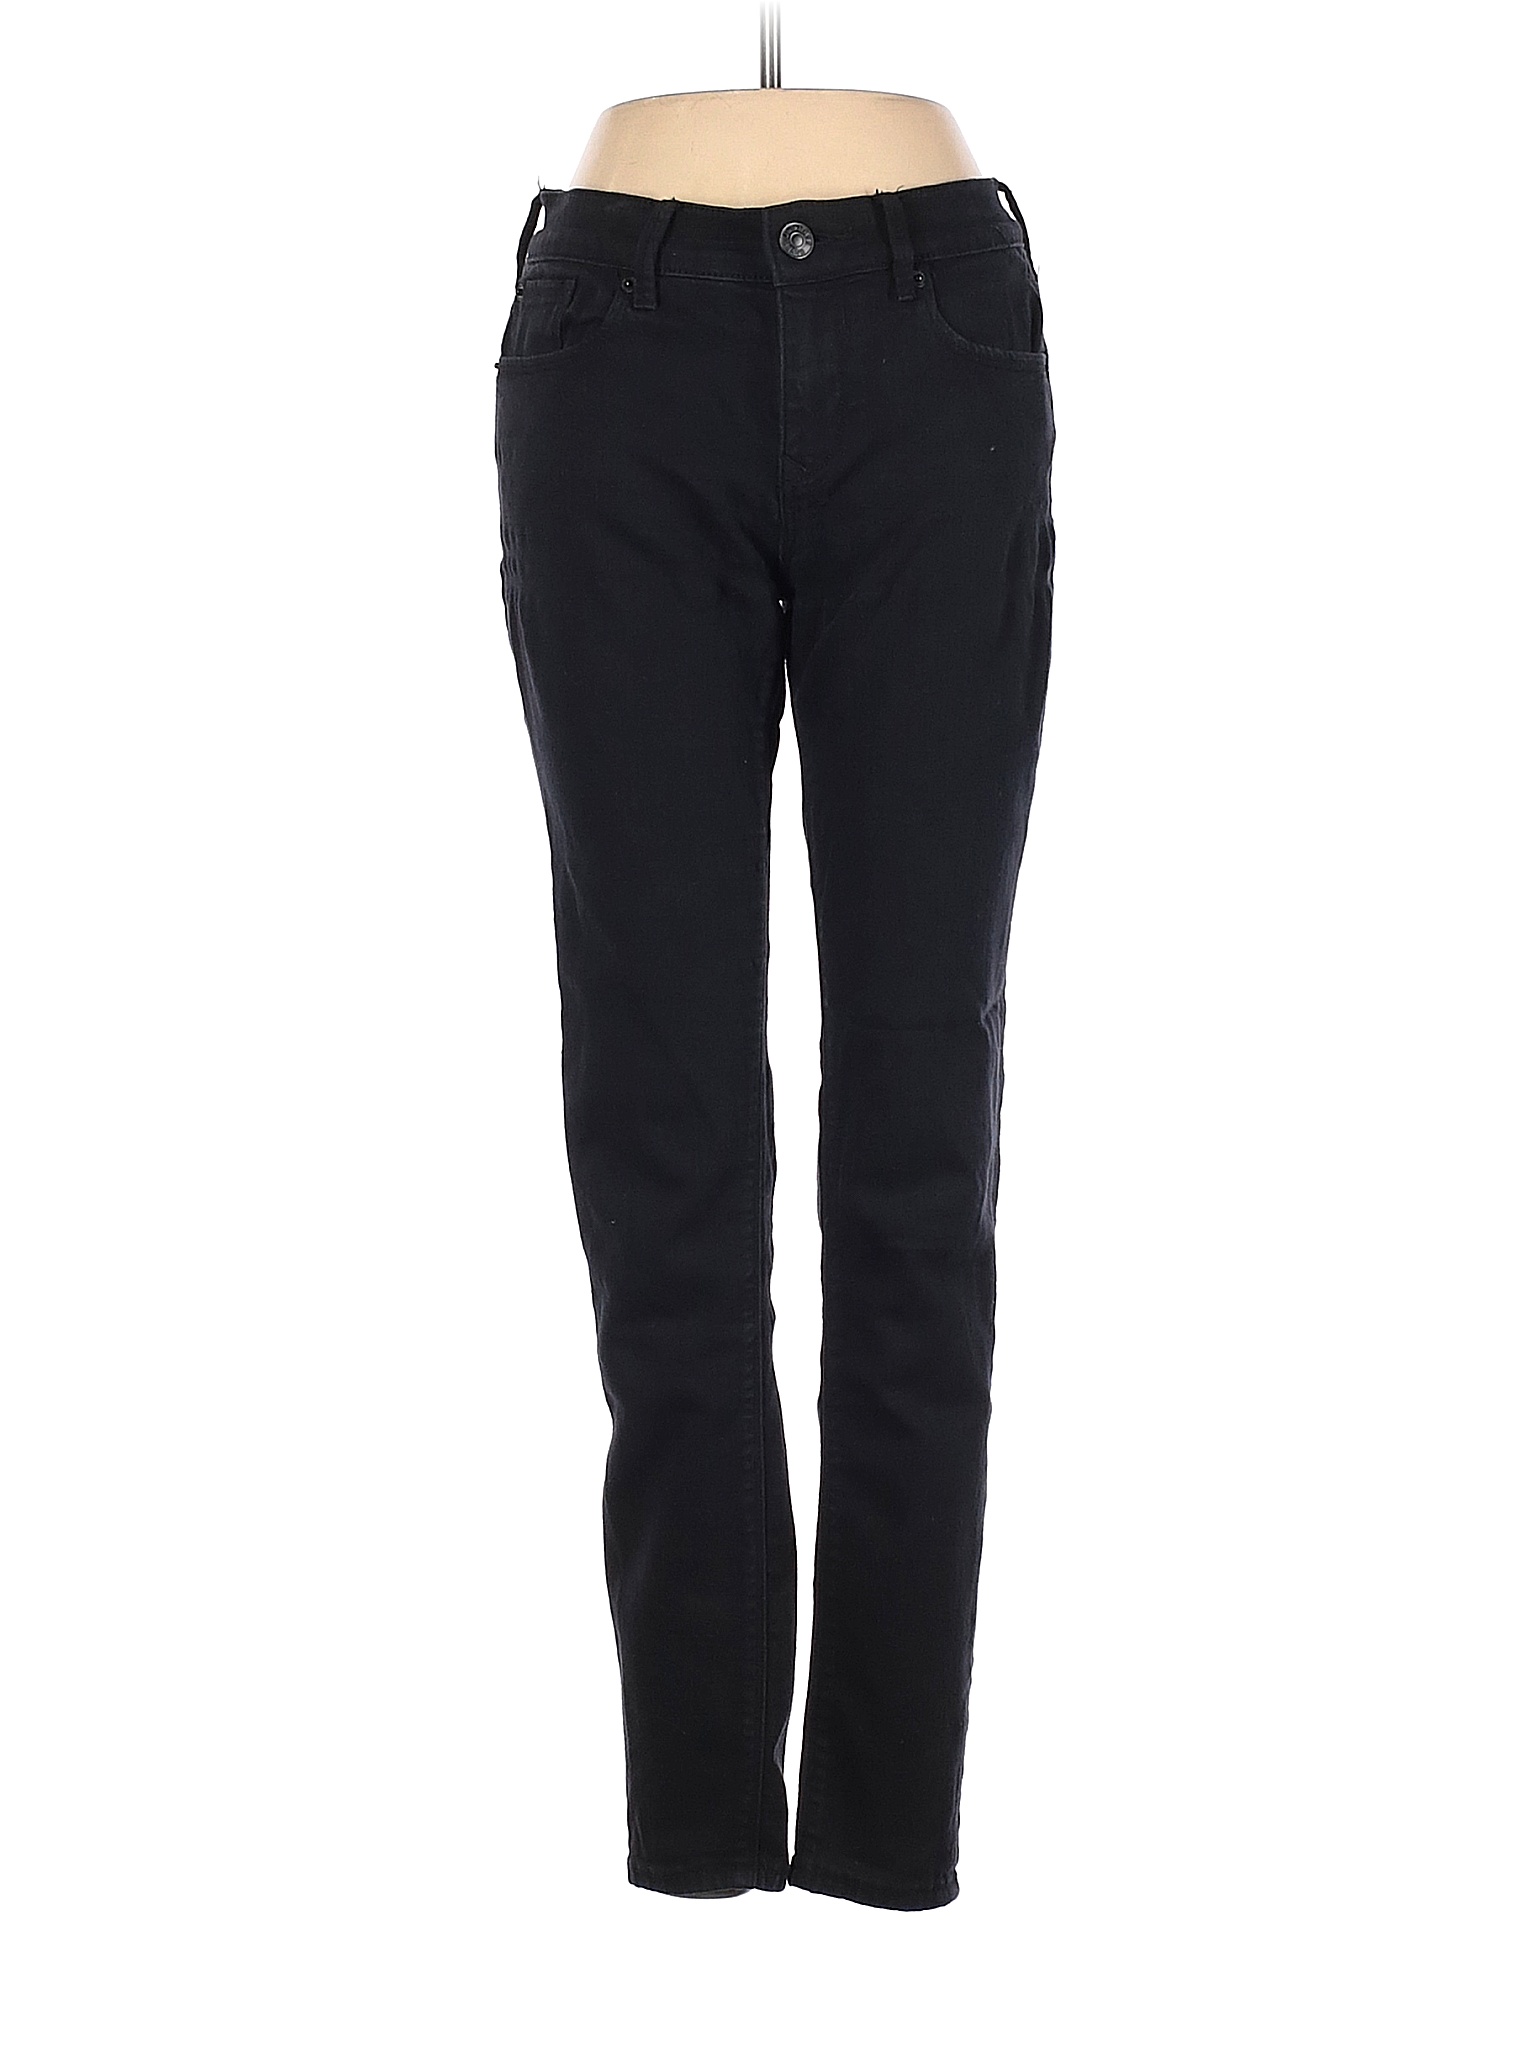 Express Jeans Black Jeans Size 2 - 84% off | thredUP